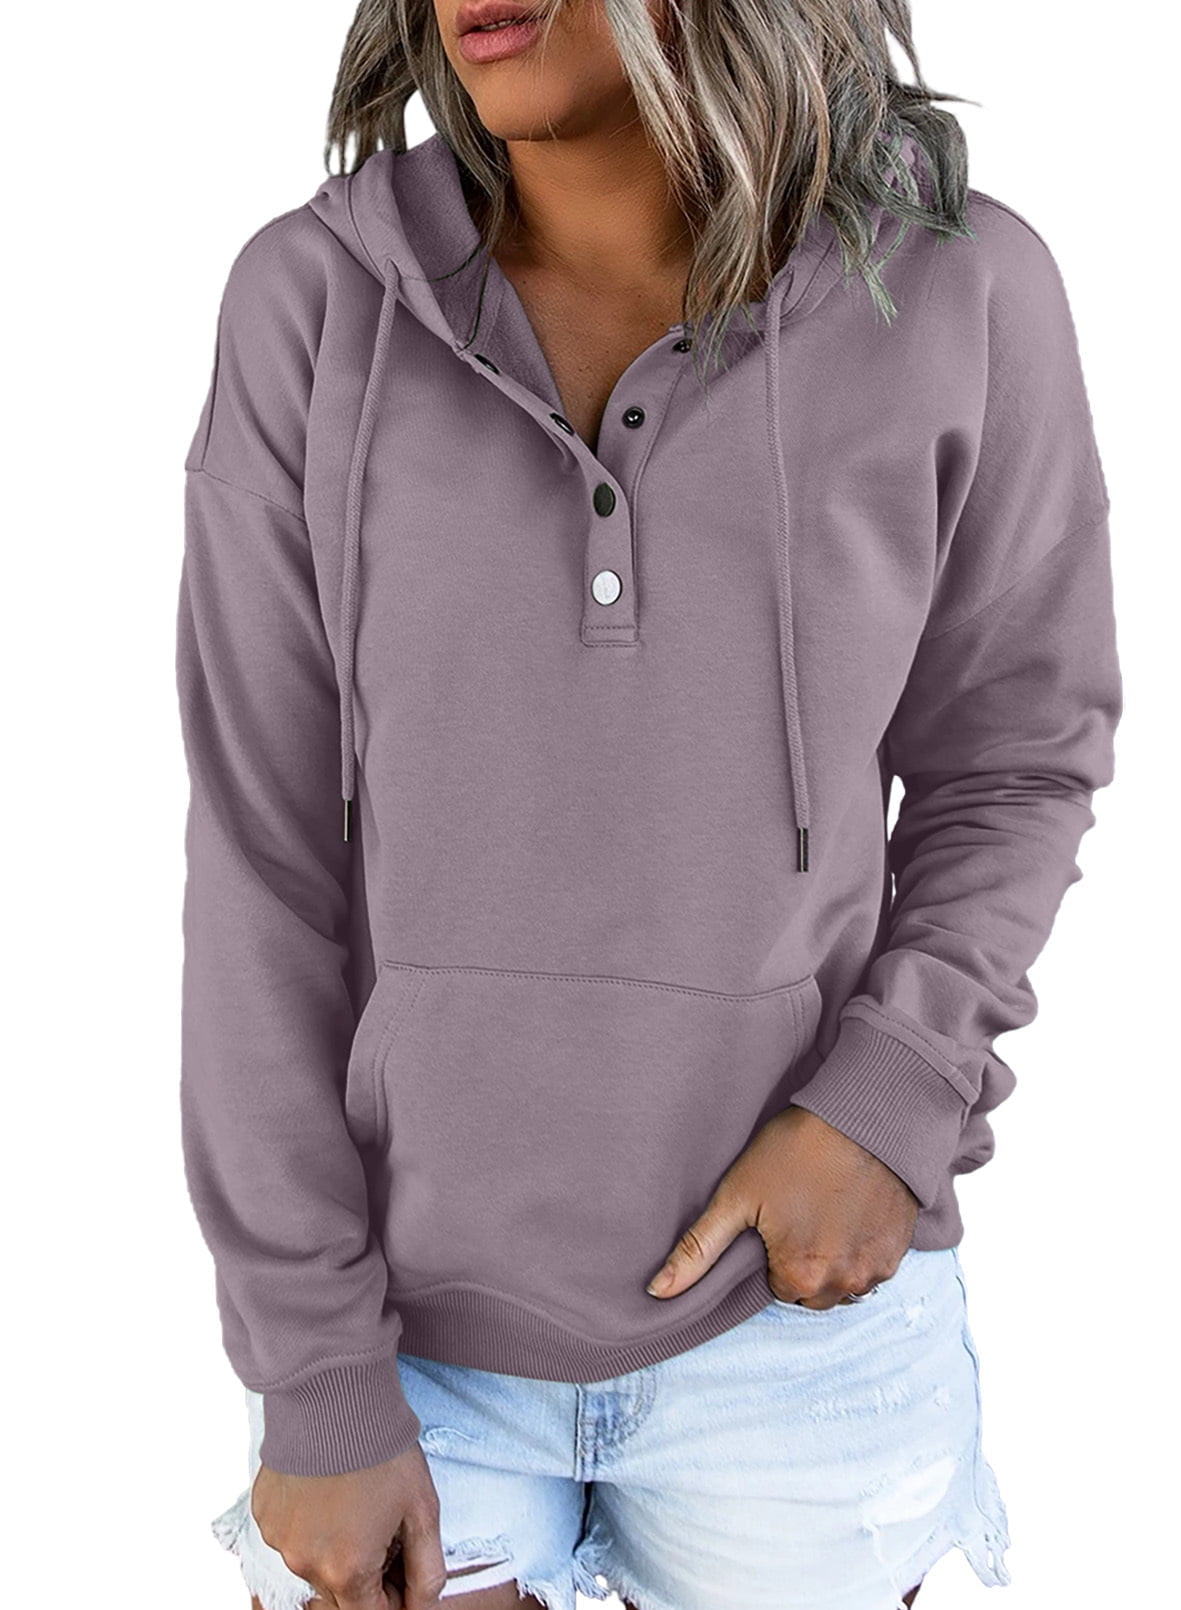 Sweaters for Women Hoodies for Women Zip up Drawstring Hooded Sweatshirt Vintage Print Plus Size Long Sleeve Pullover 